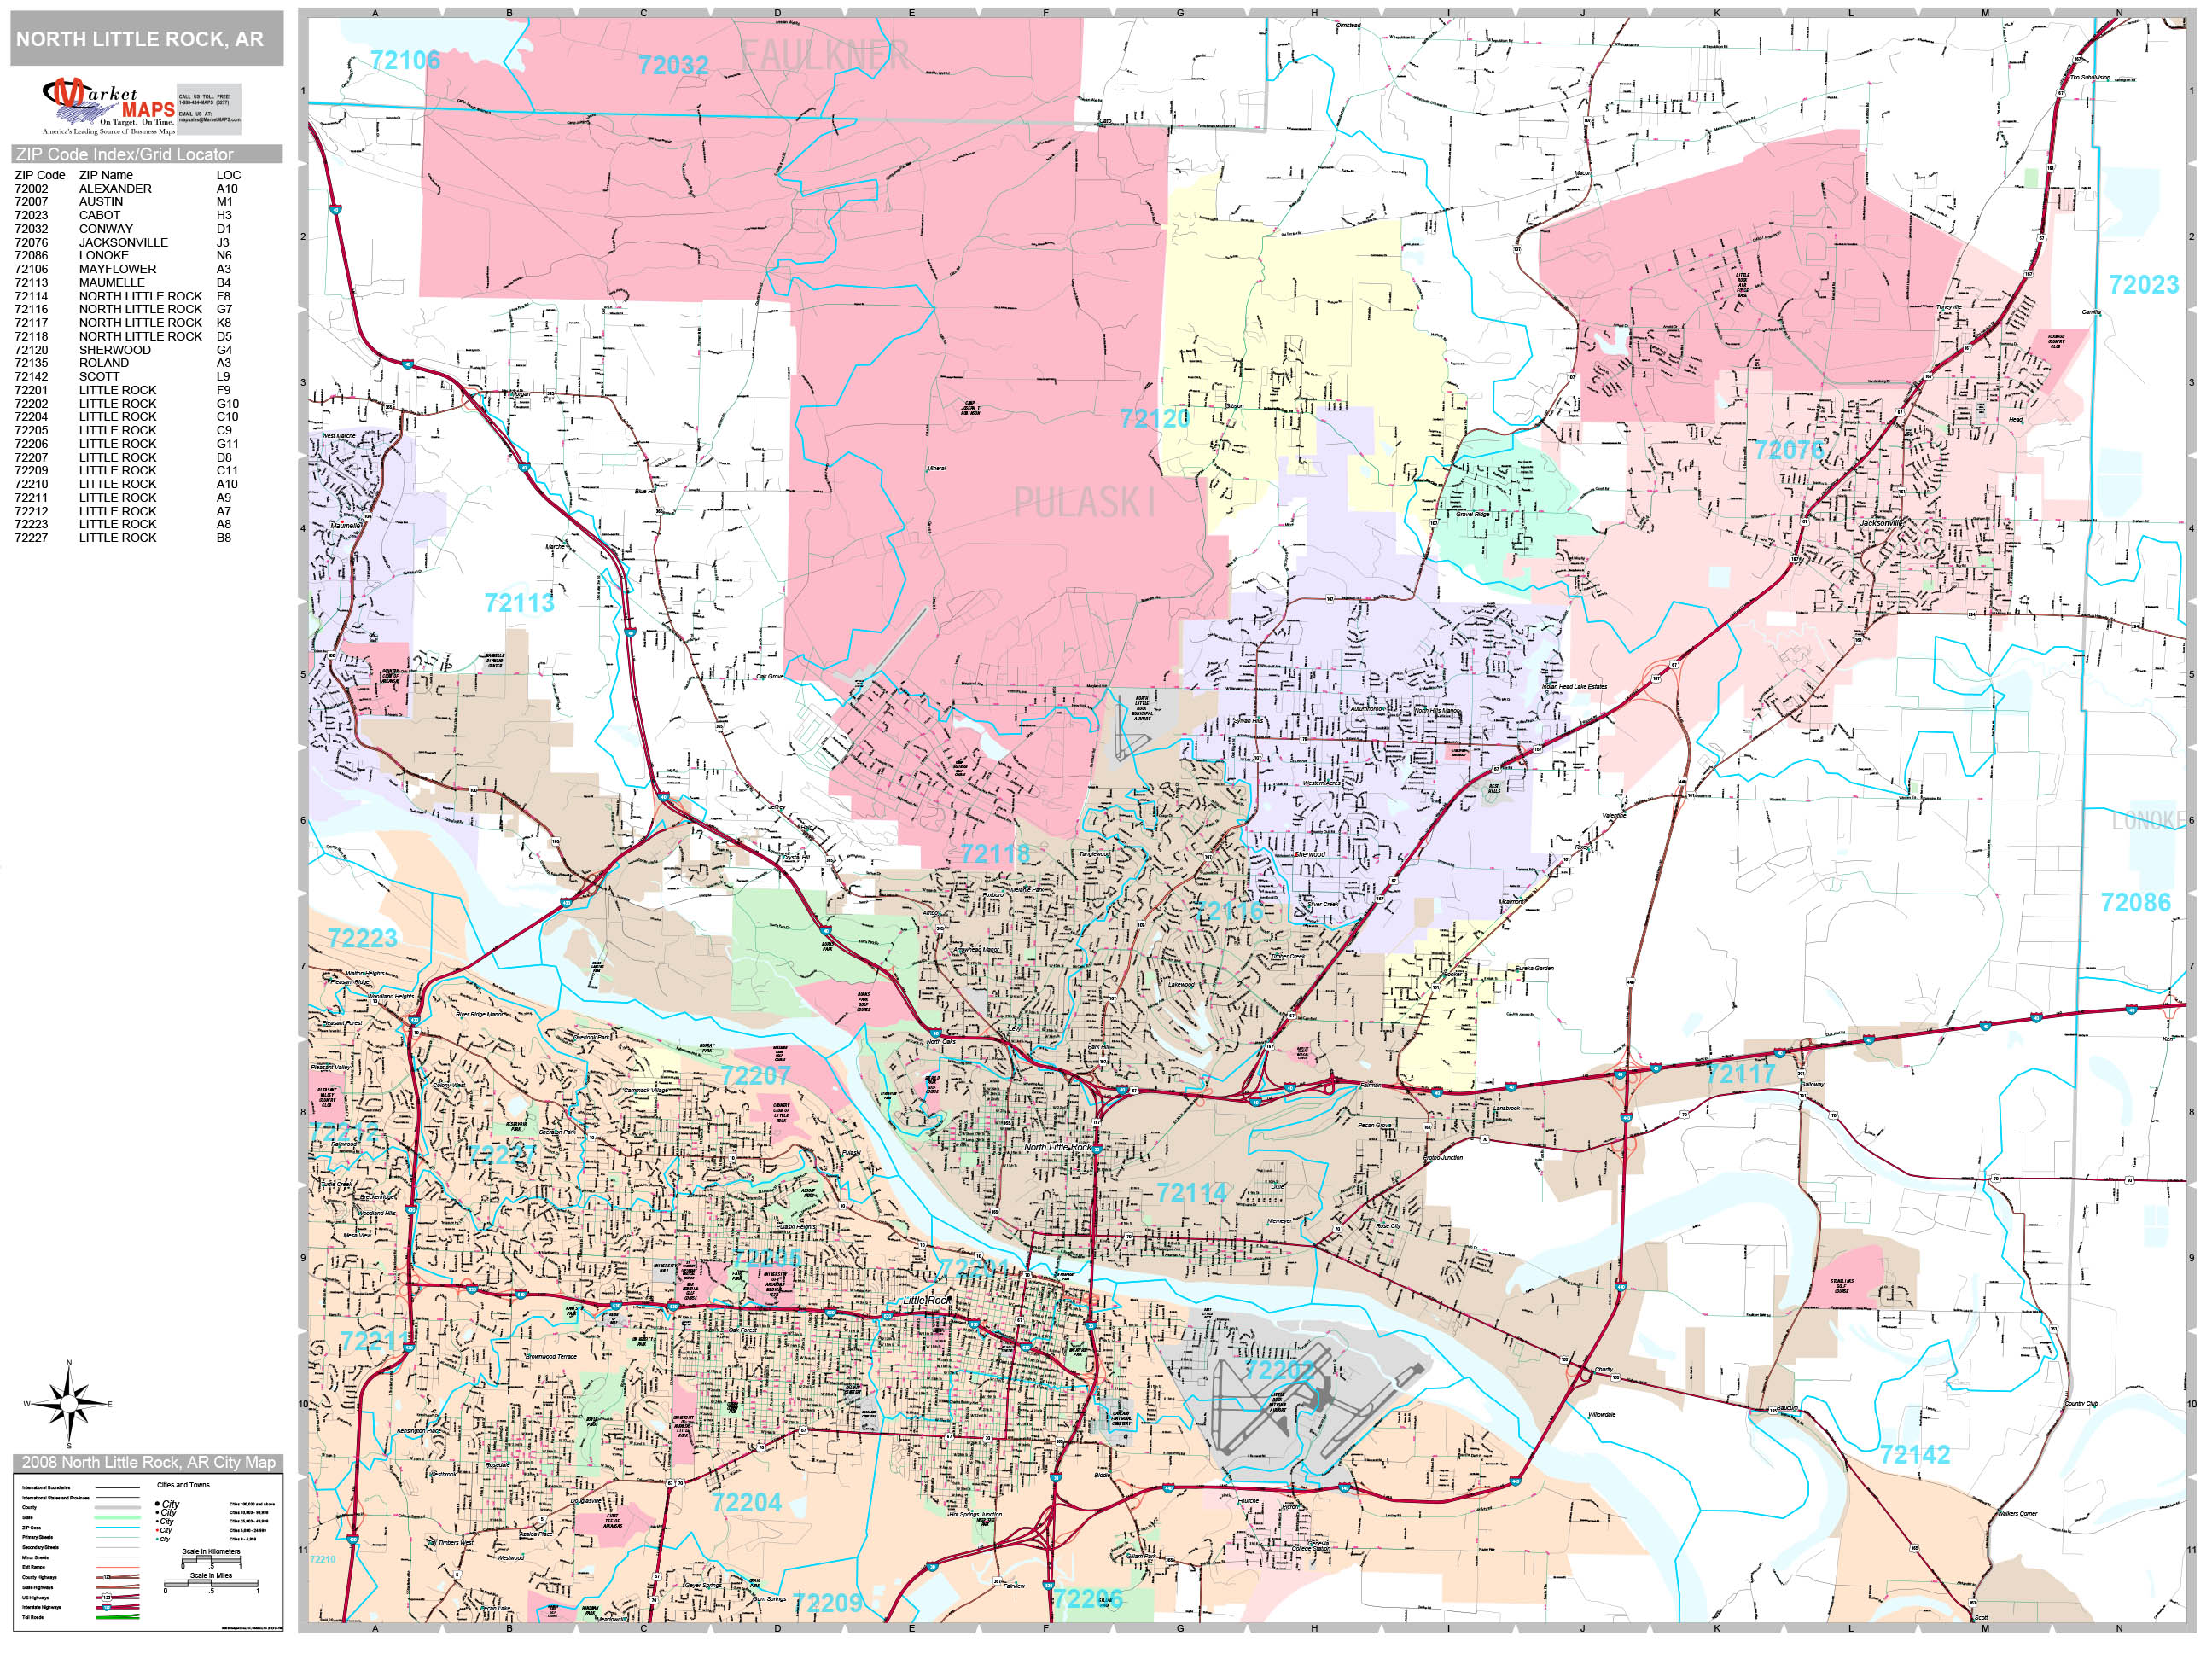 North Little Rock Arkansas Wall Map (Premium Style) by MarketMAPS